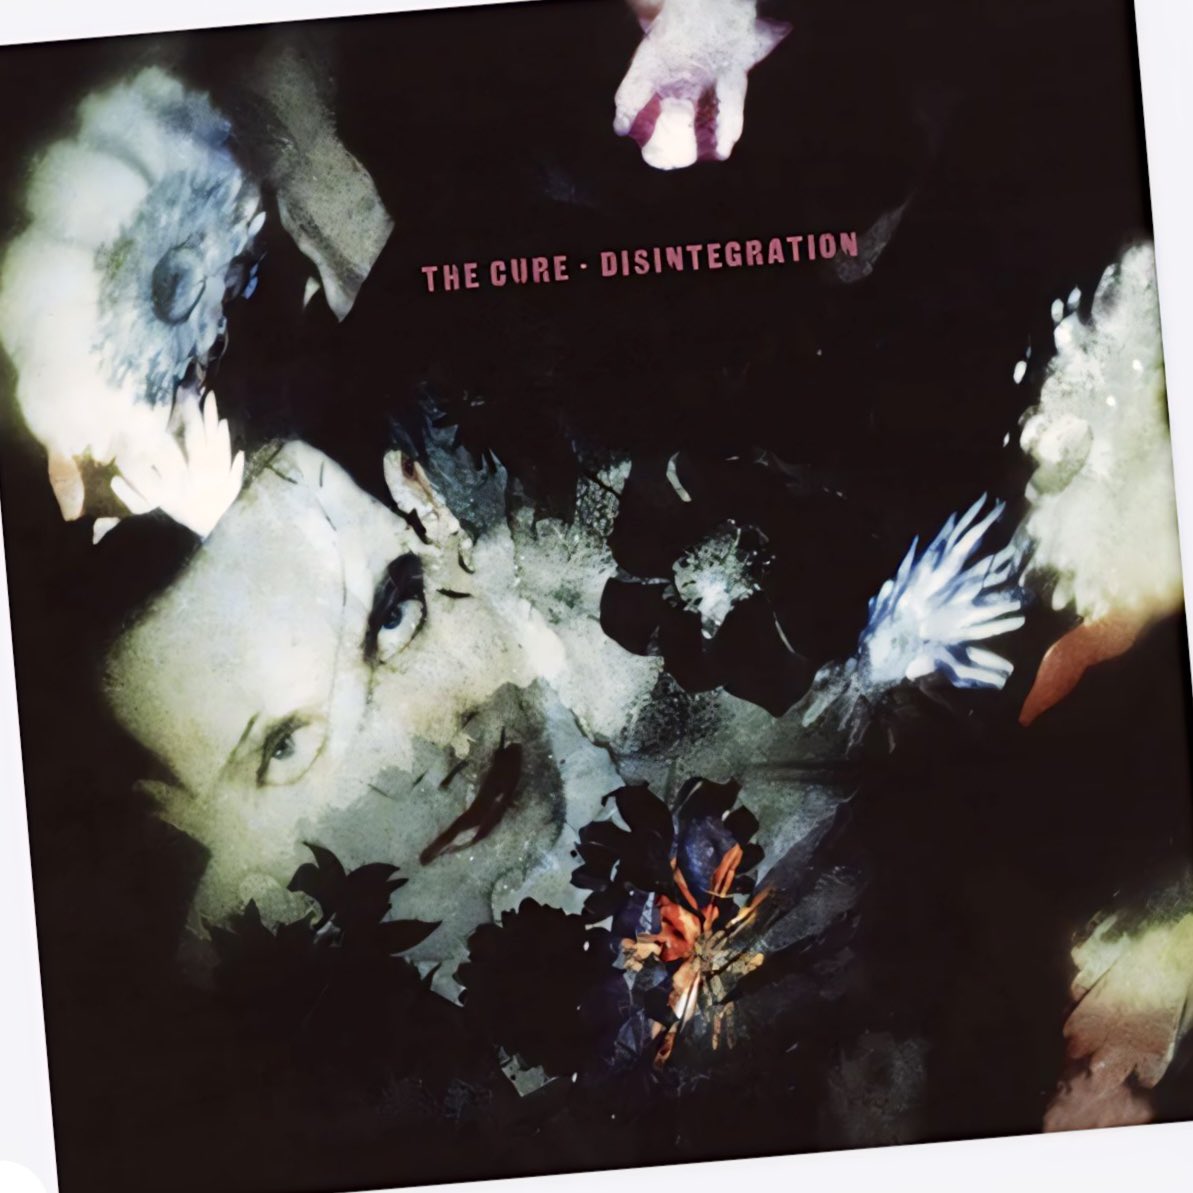 The Cure
Disintegration 

2 May 1989

@NewWaveAndPunk #thecure #80s #music #records #robertsmith #vinylalbum #vinylrecords